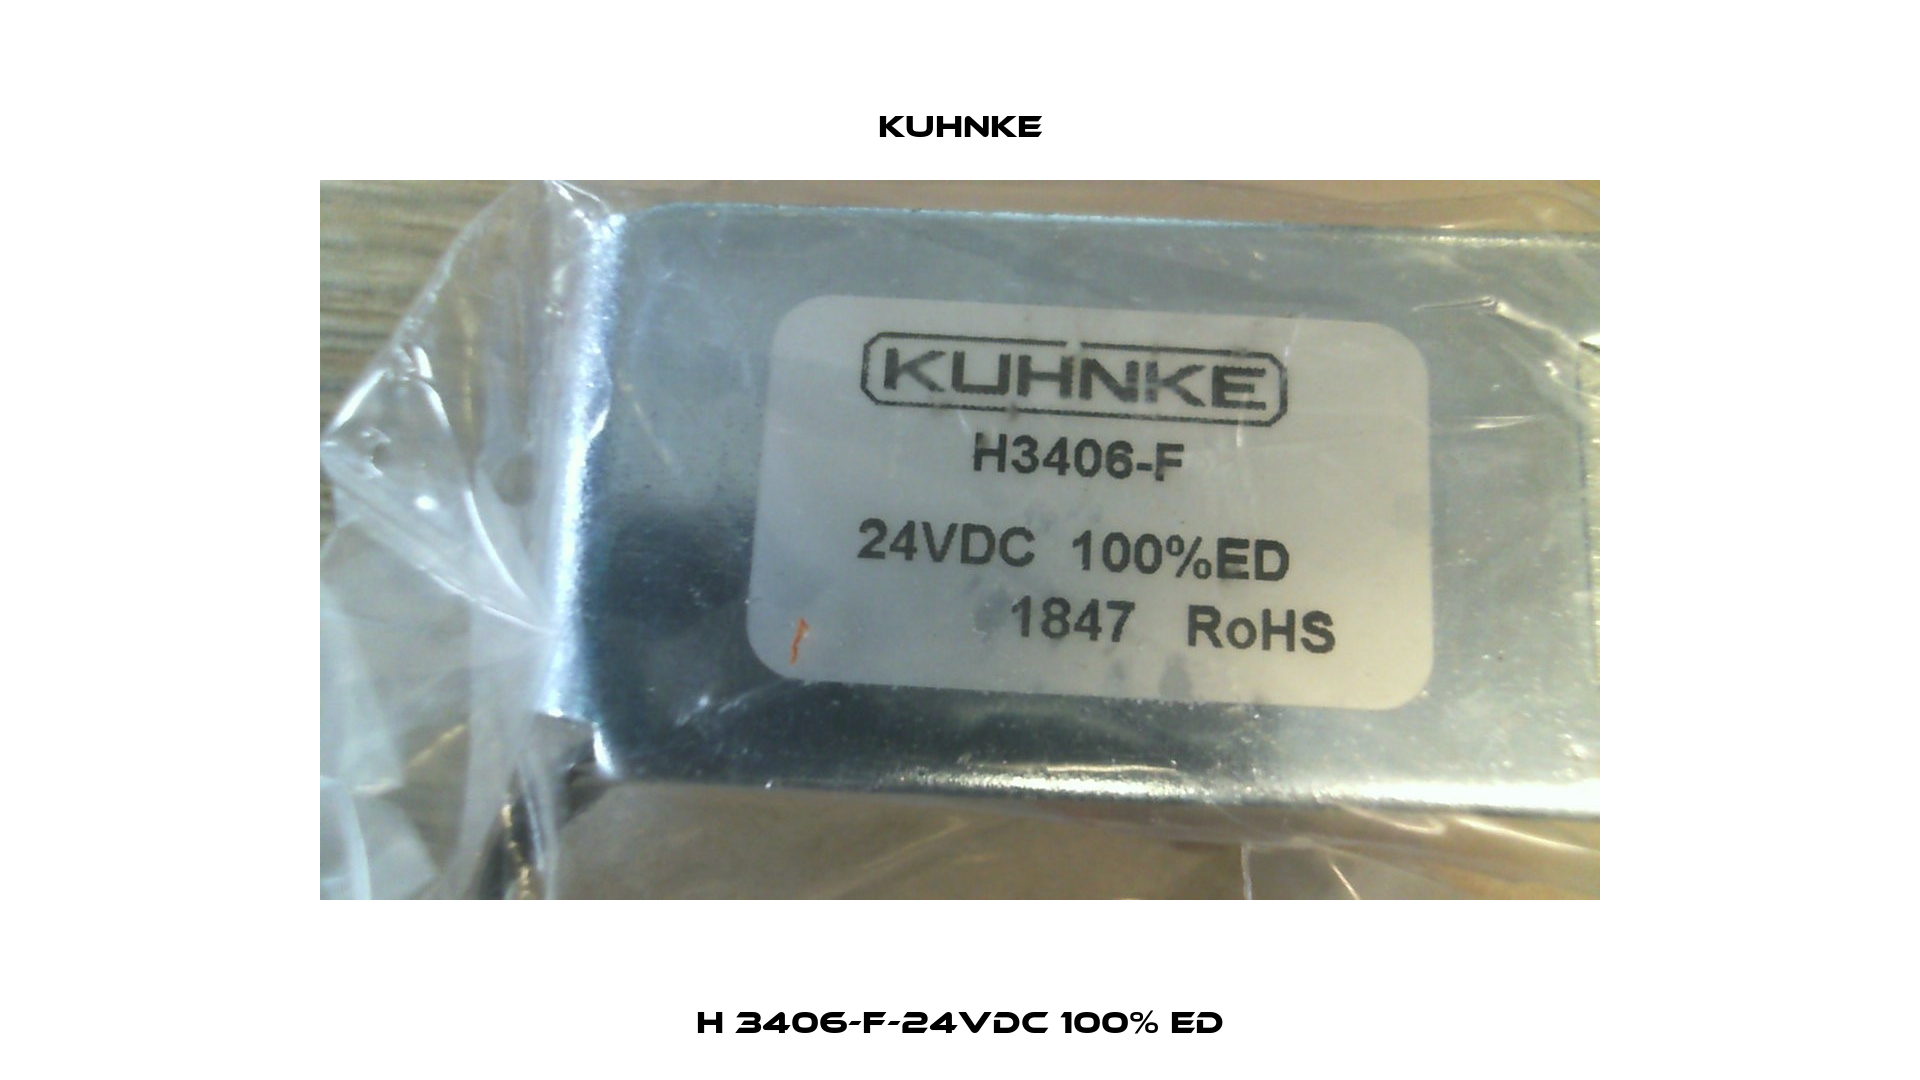 H 3406-F-24VDC 100% ED Kuhnke